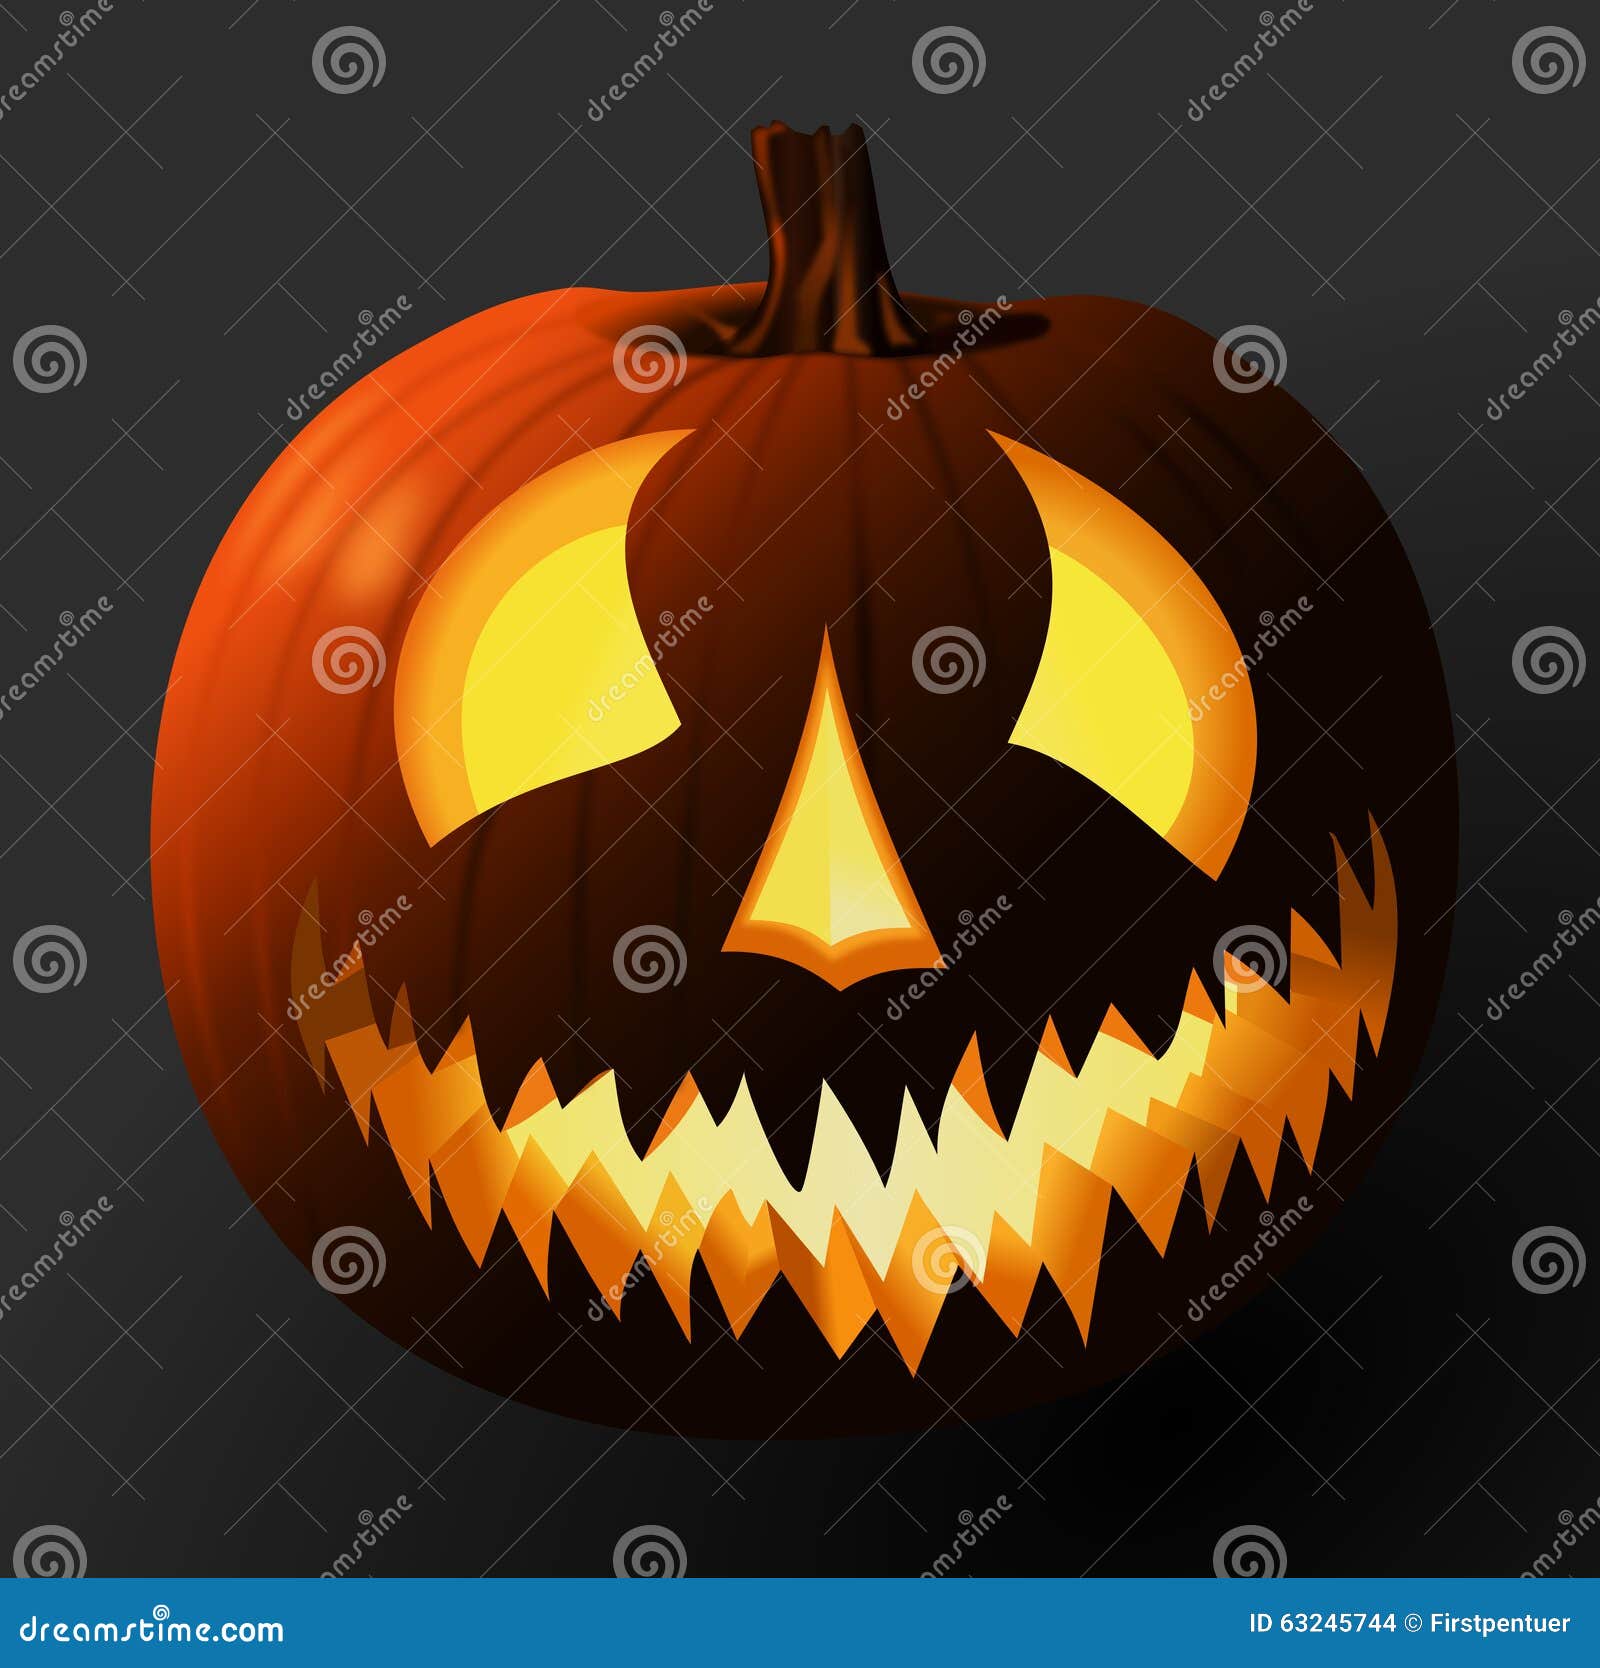 Halloween Pumpkin at Dark Background Stock Illustration - Illustration ...